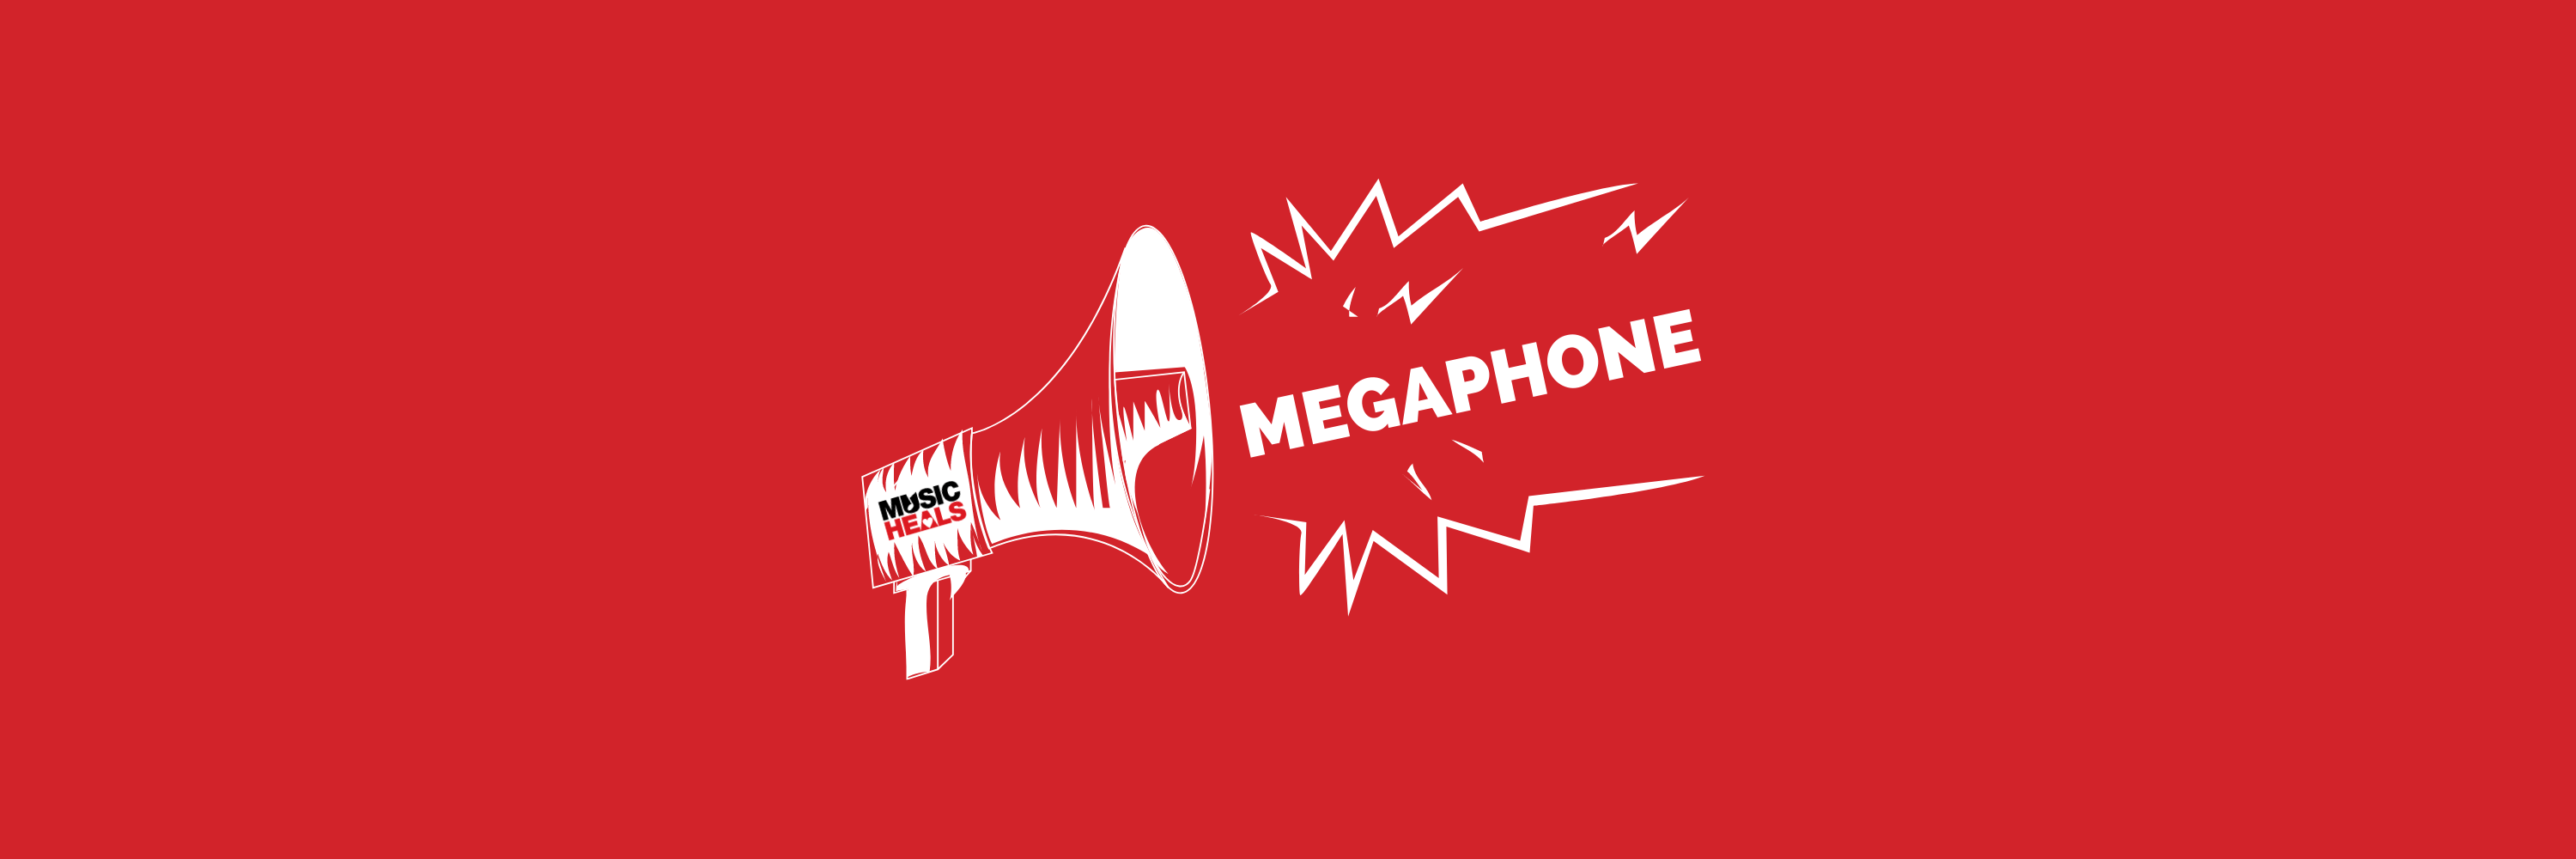 MEGAPHONE (1) (1)